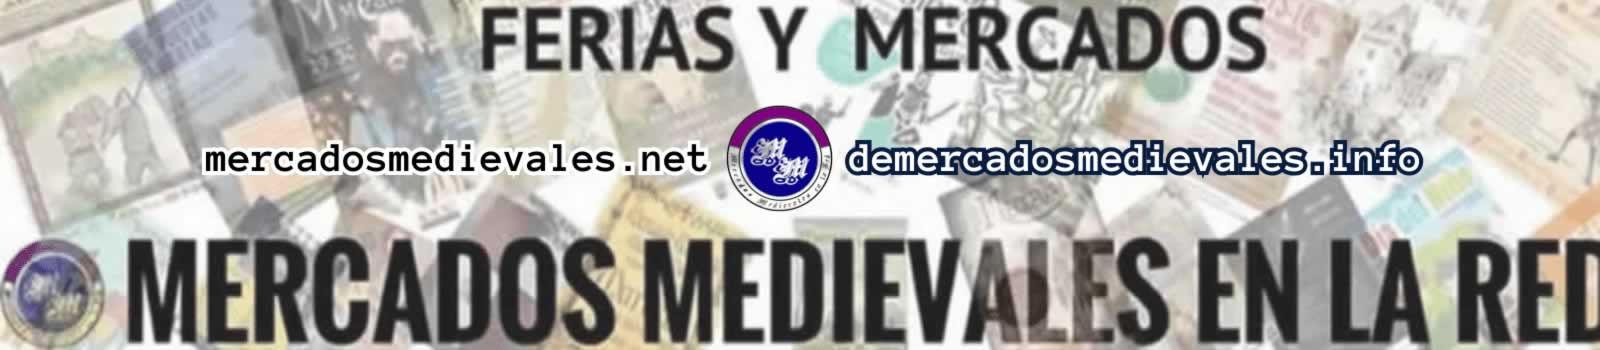 Encabezado mercadosmedievales.net 2023 - Mercadosmedievales.net Mercados Medievales